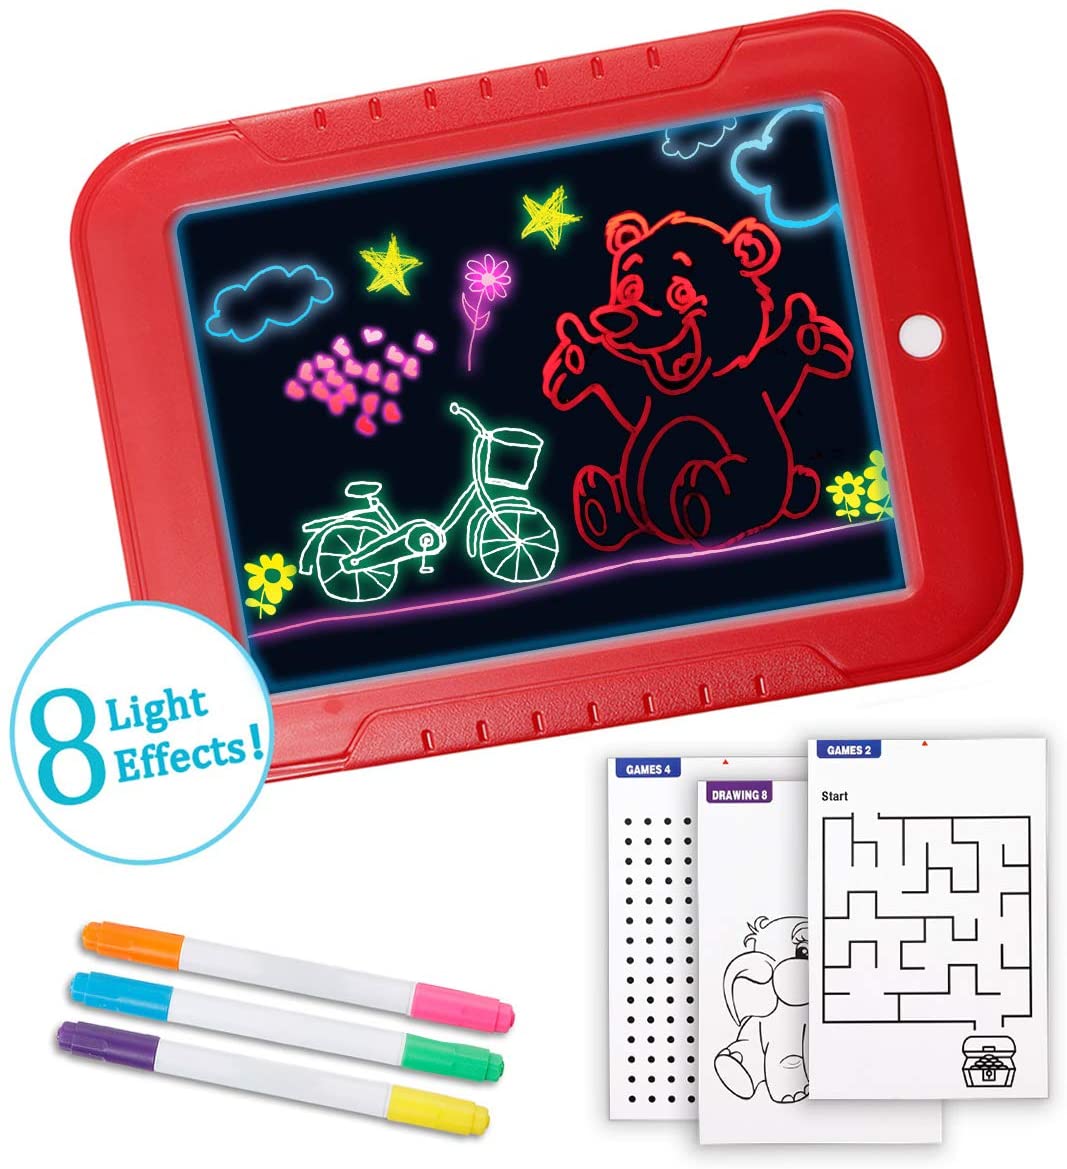 LIUMY 3D Drawing Board, 22 PCS Portable Kid’s Drawing Board Kit with 1